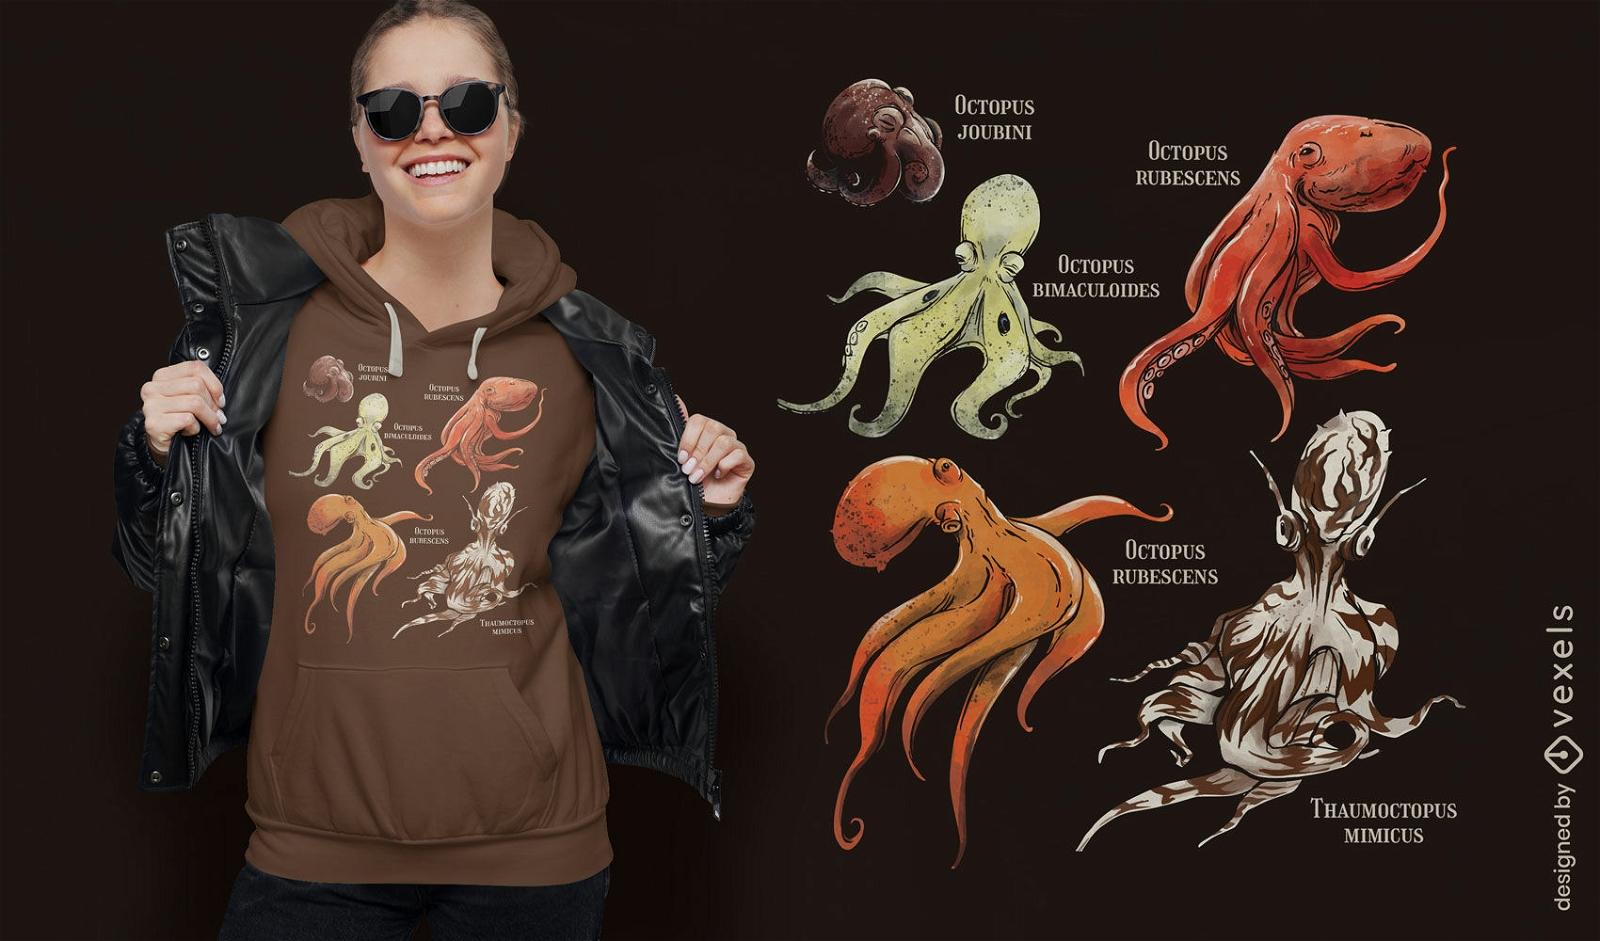 Octopus sea animals species t-shirt design